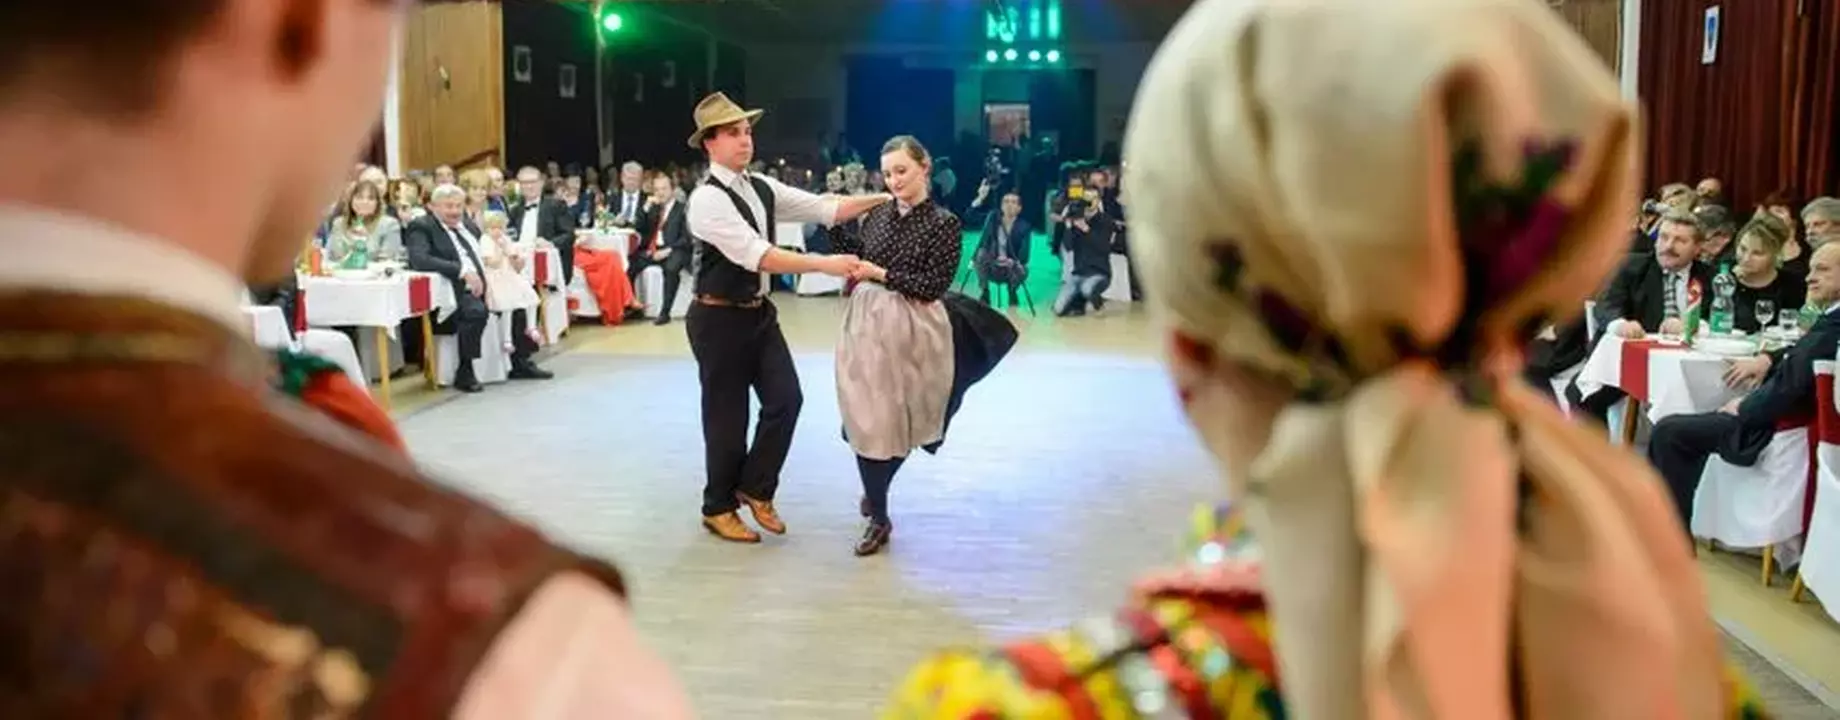 Felvidéki magyar táncosok